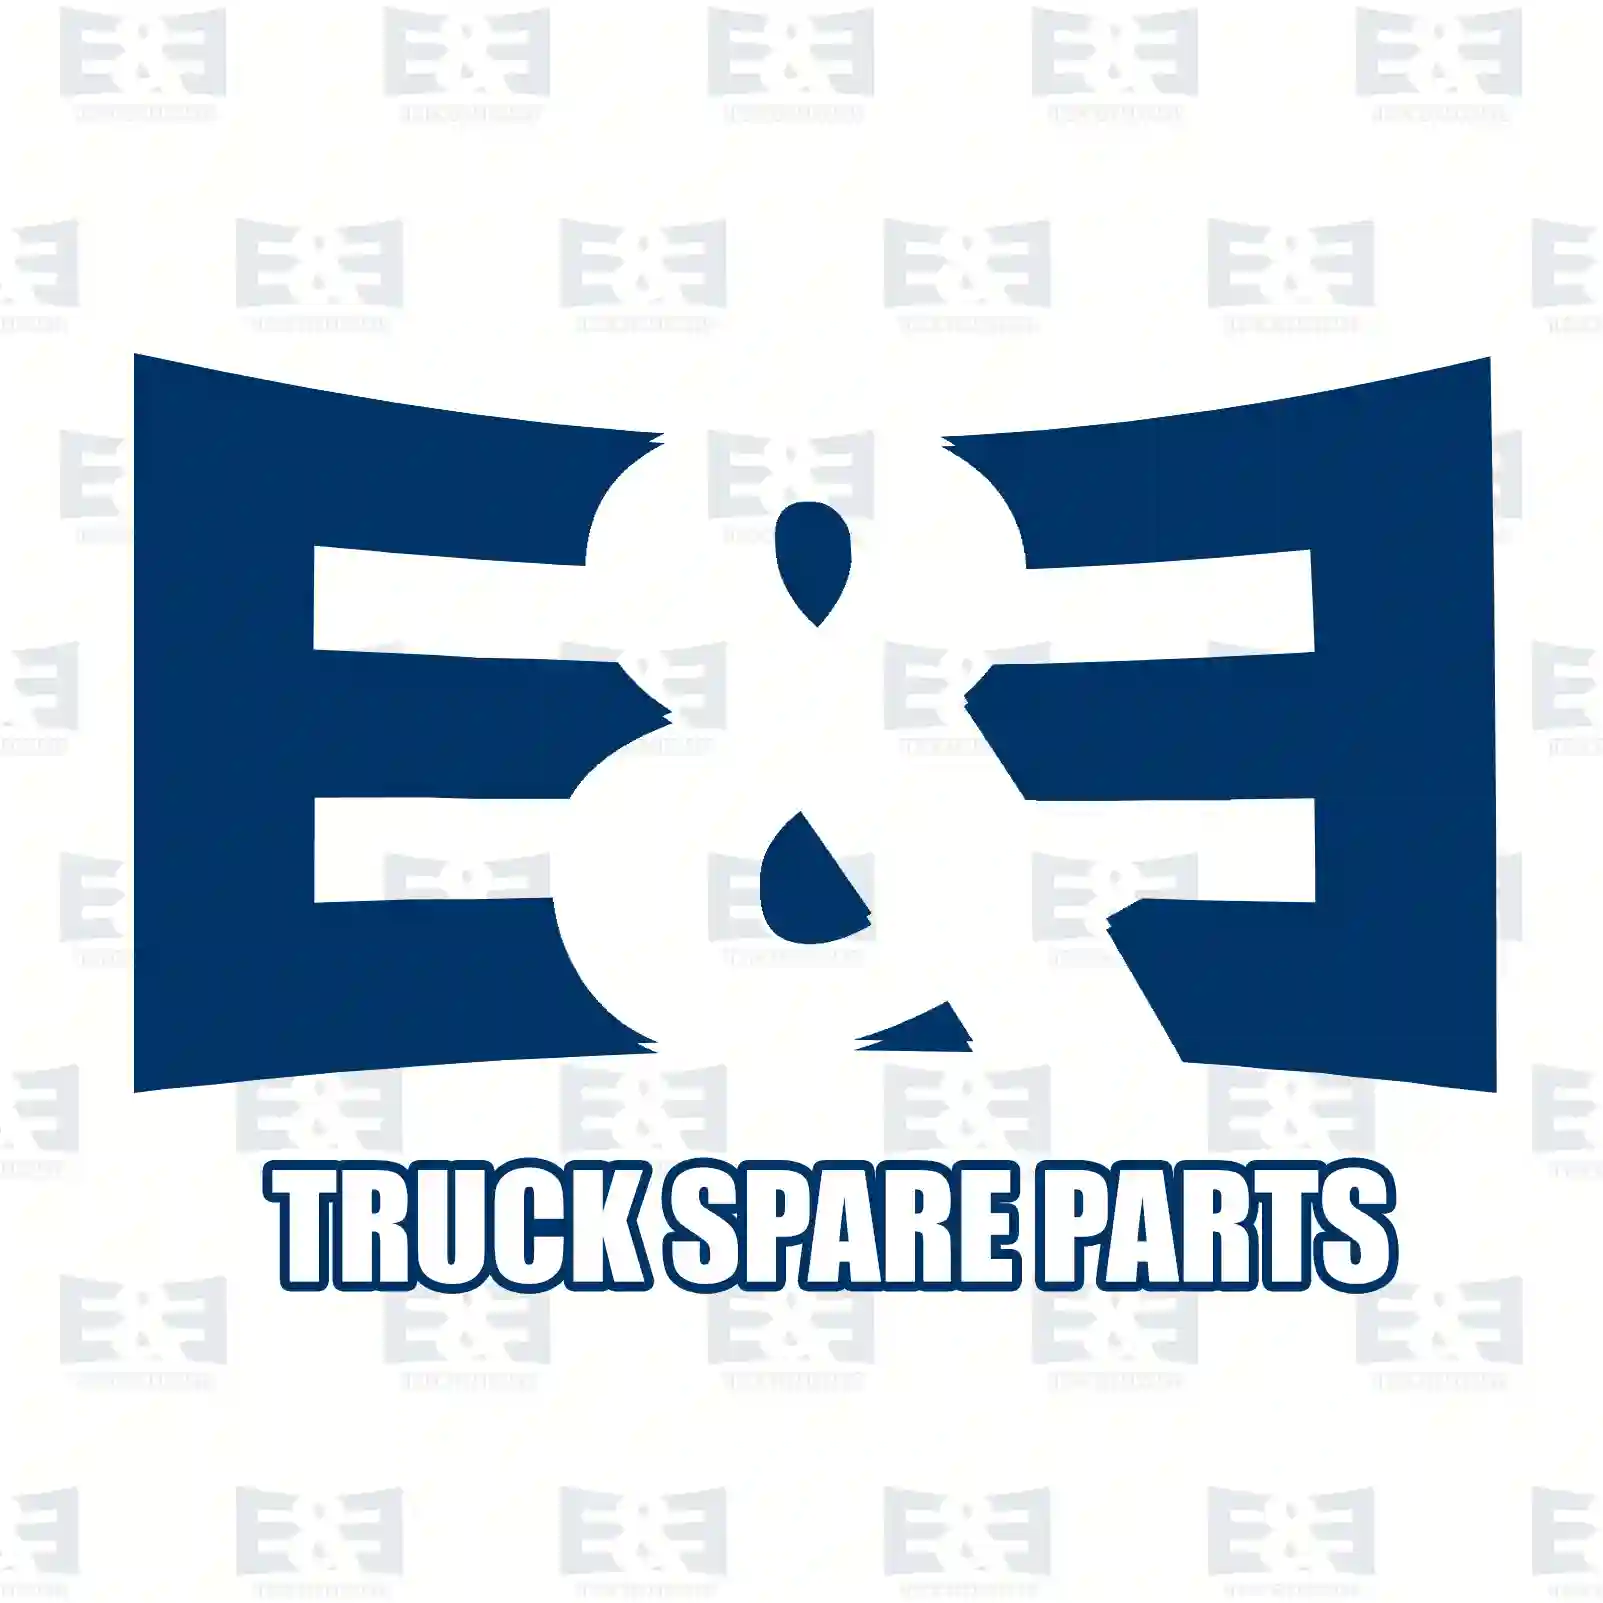 Retarder Oil seal, EE No 2E2277999 ,  oem no:01117628, 01160749, 01117628, 01160749, 0009979747, 006503030100, 006503030200, 006504030200, 0948370470, 1109869, 139023, 309665, 368076, 525320 E&E Truck Spare Parts | Truck Spare Parts, Auotomotive Spare Parts